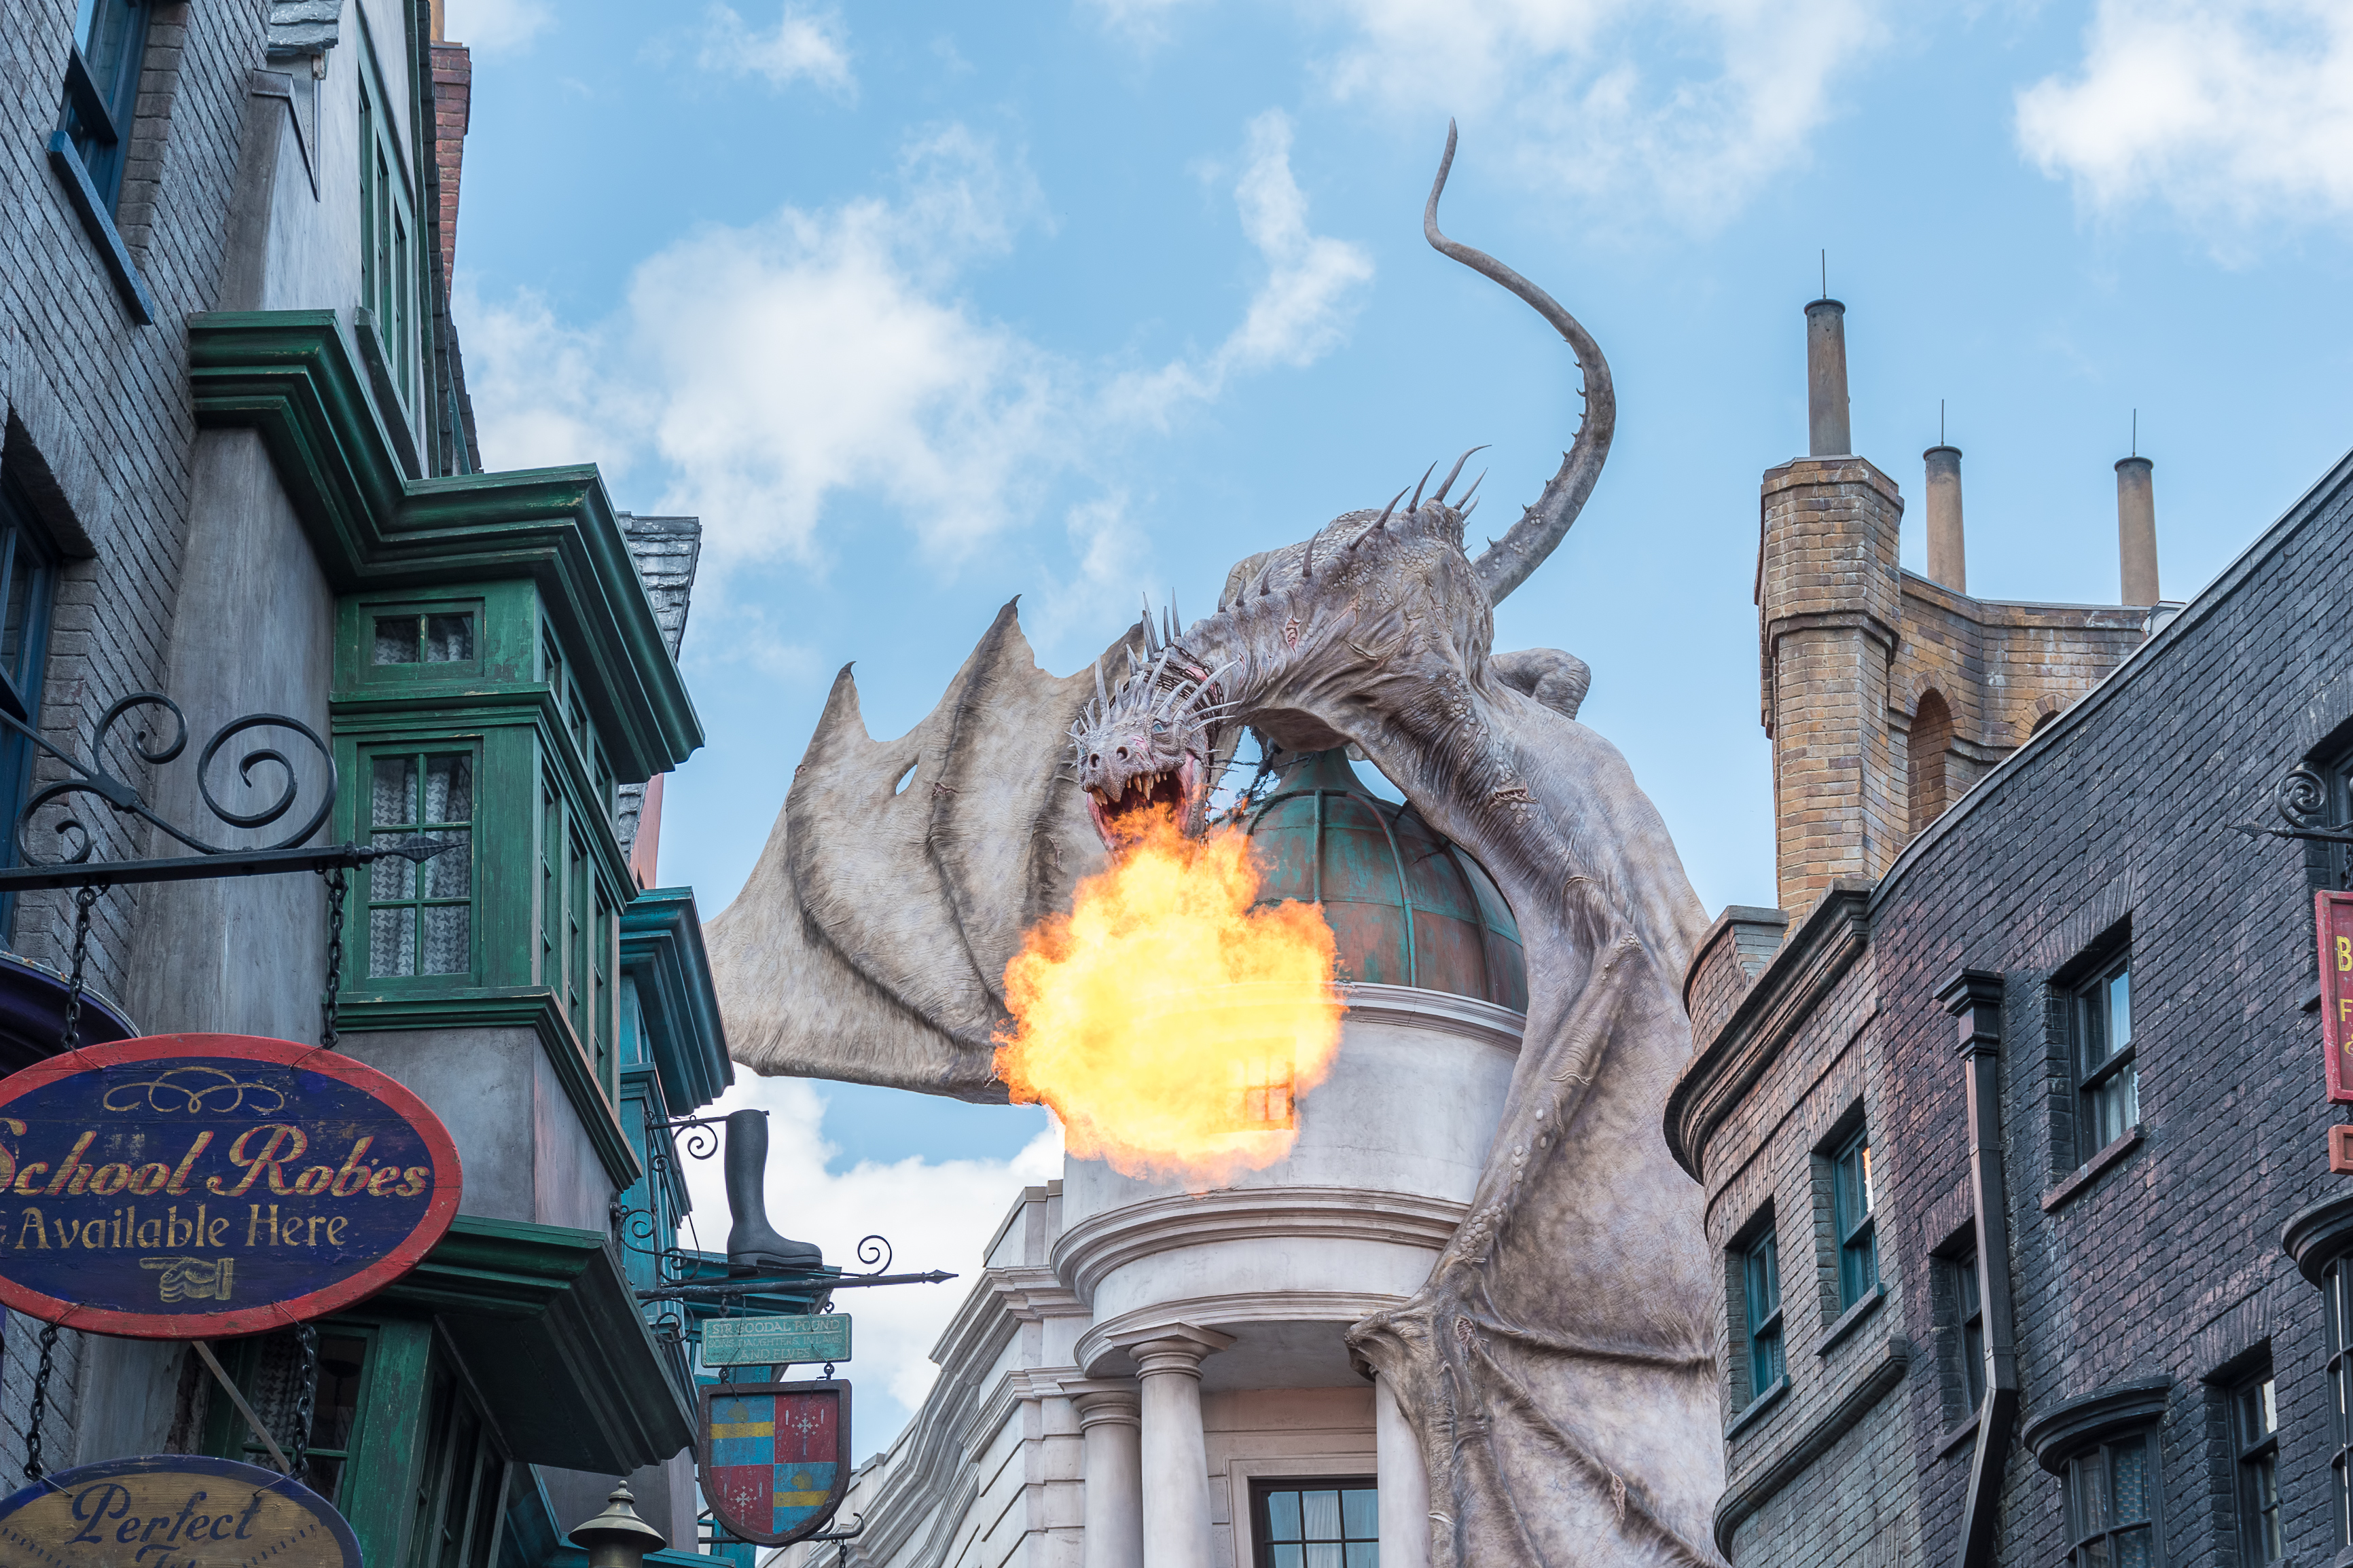 Wizarding World of Harry Potter – Diagon Alley | Universal Studios, USA